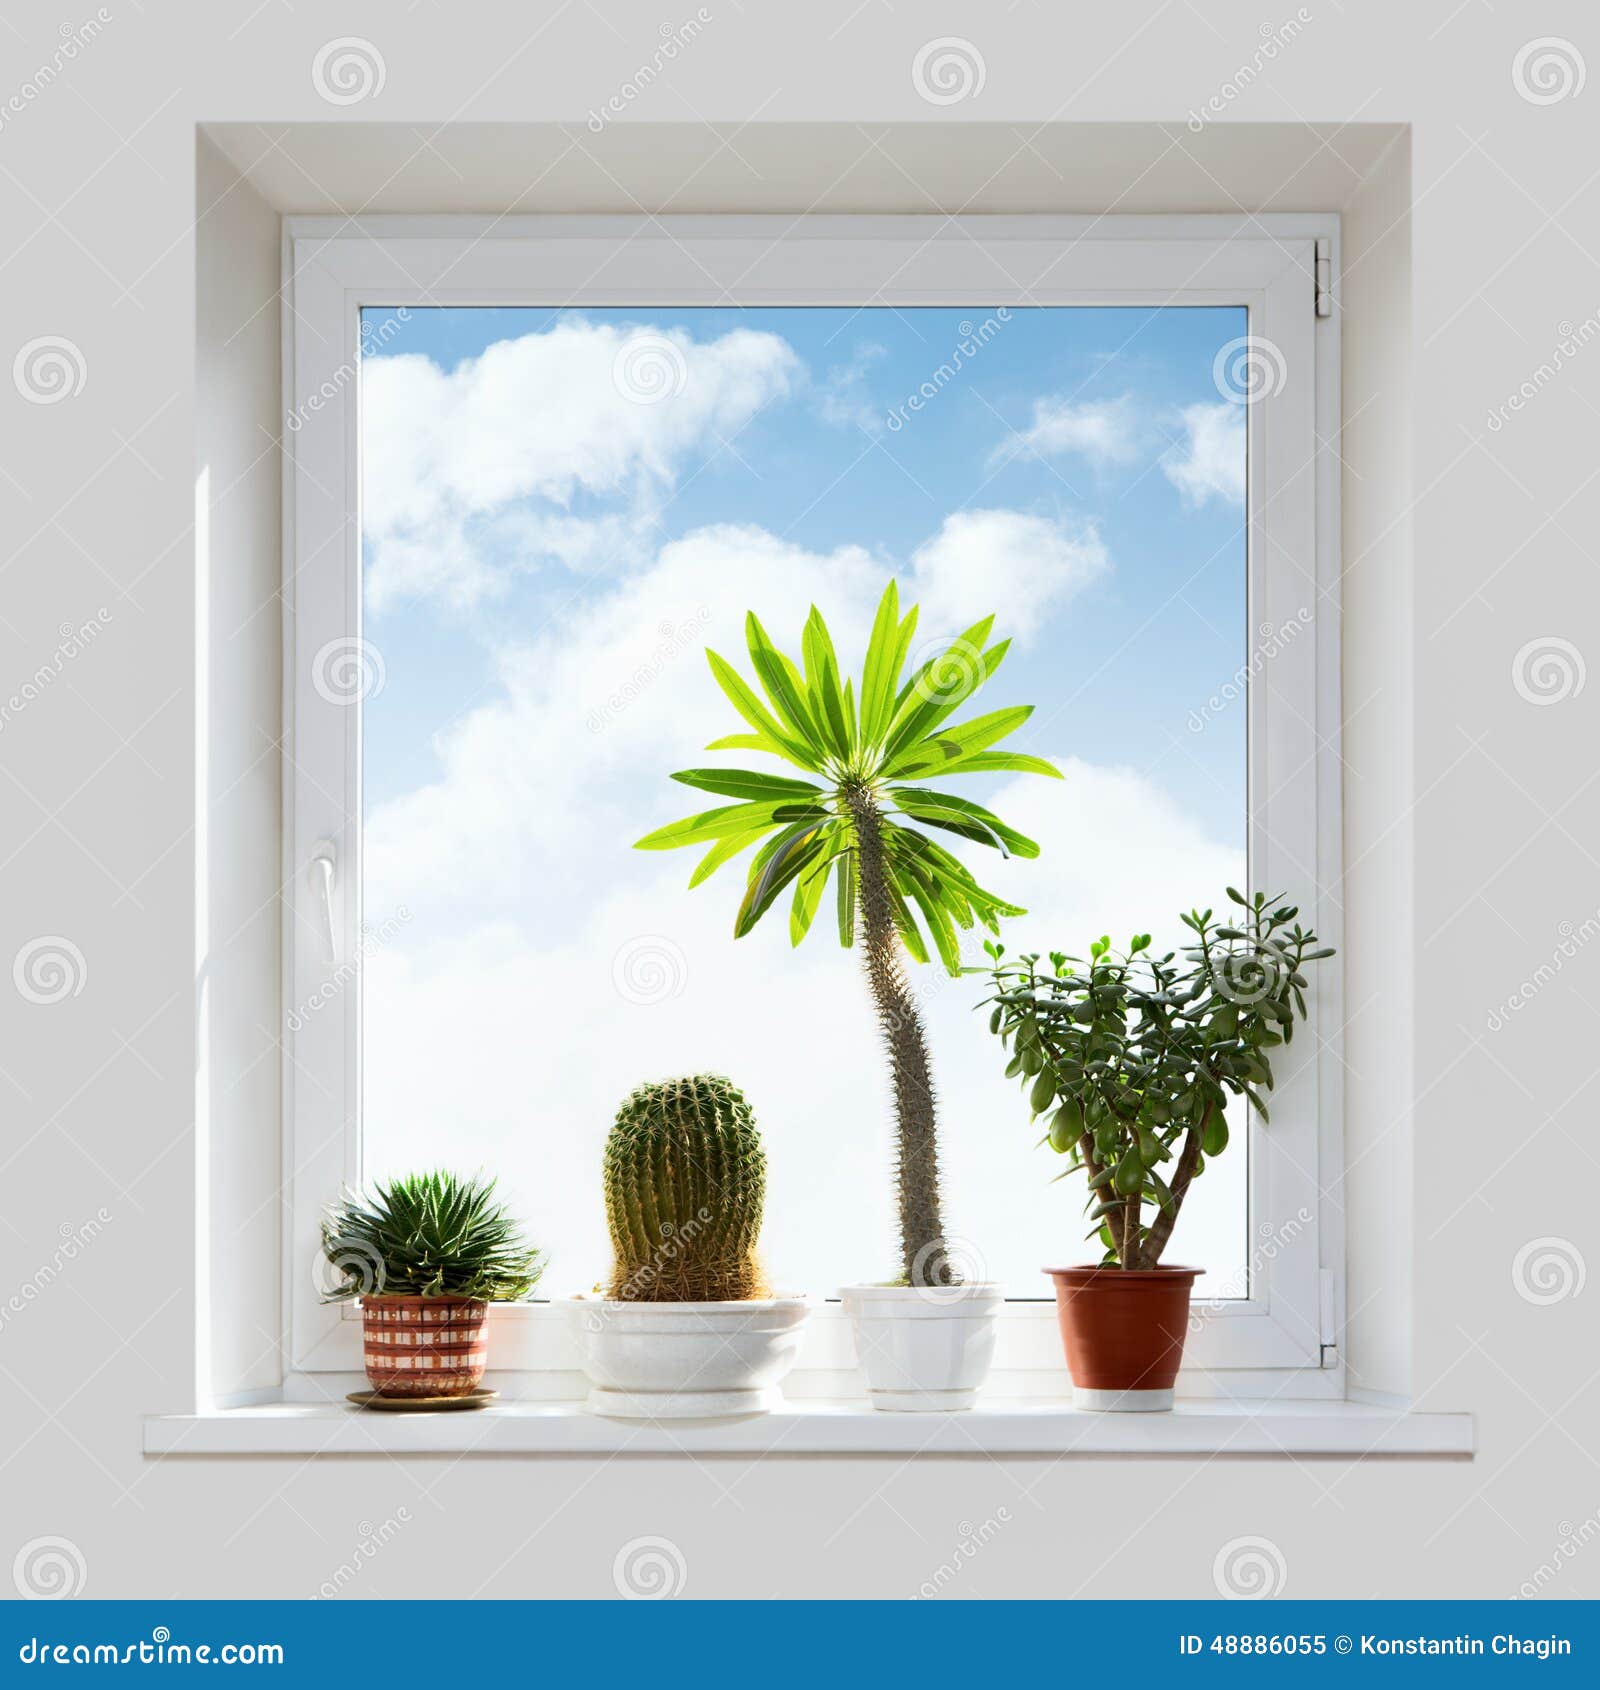 House Plants On The Windowsill. Stock Photo  Image: 48886055